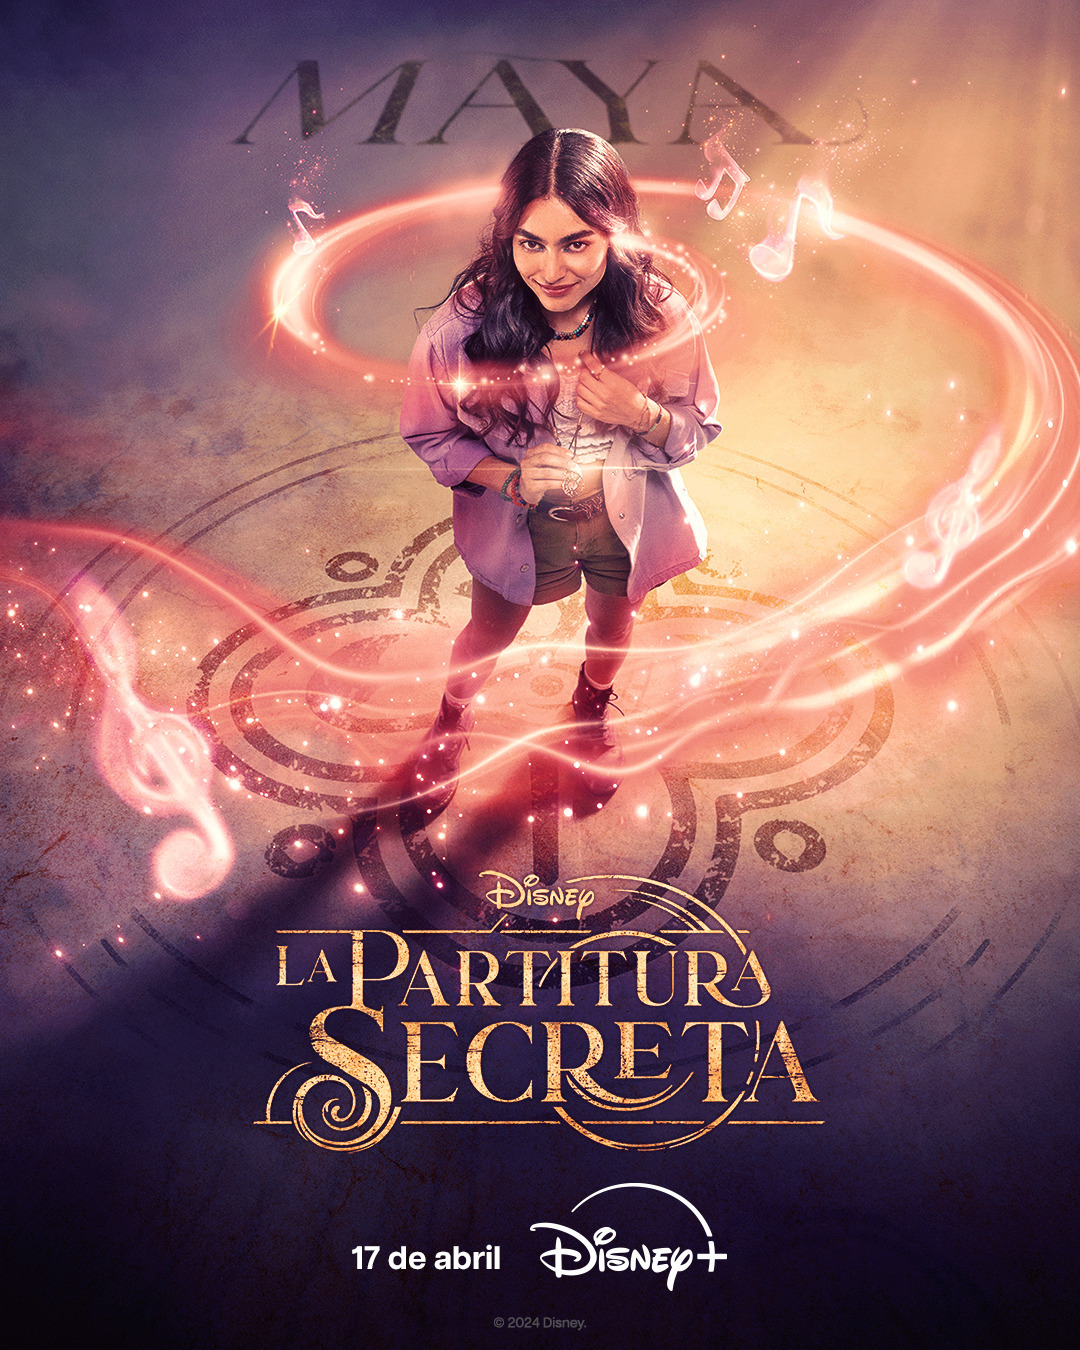 Extra Large TV Poster Image for La partitura secreta (#4 of 7)